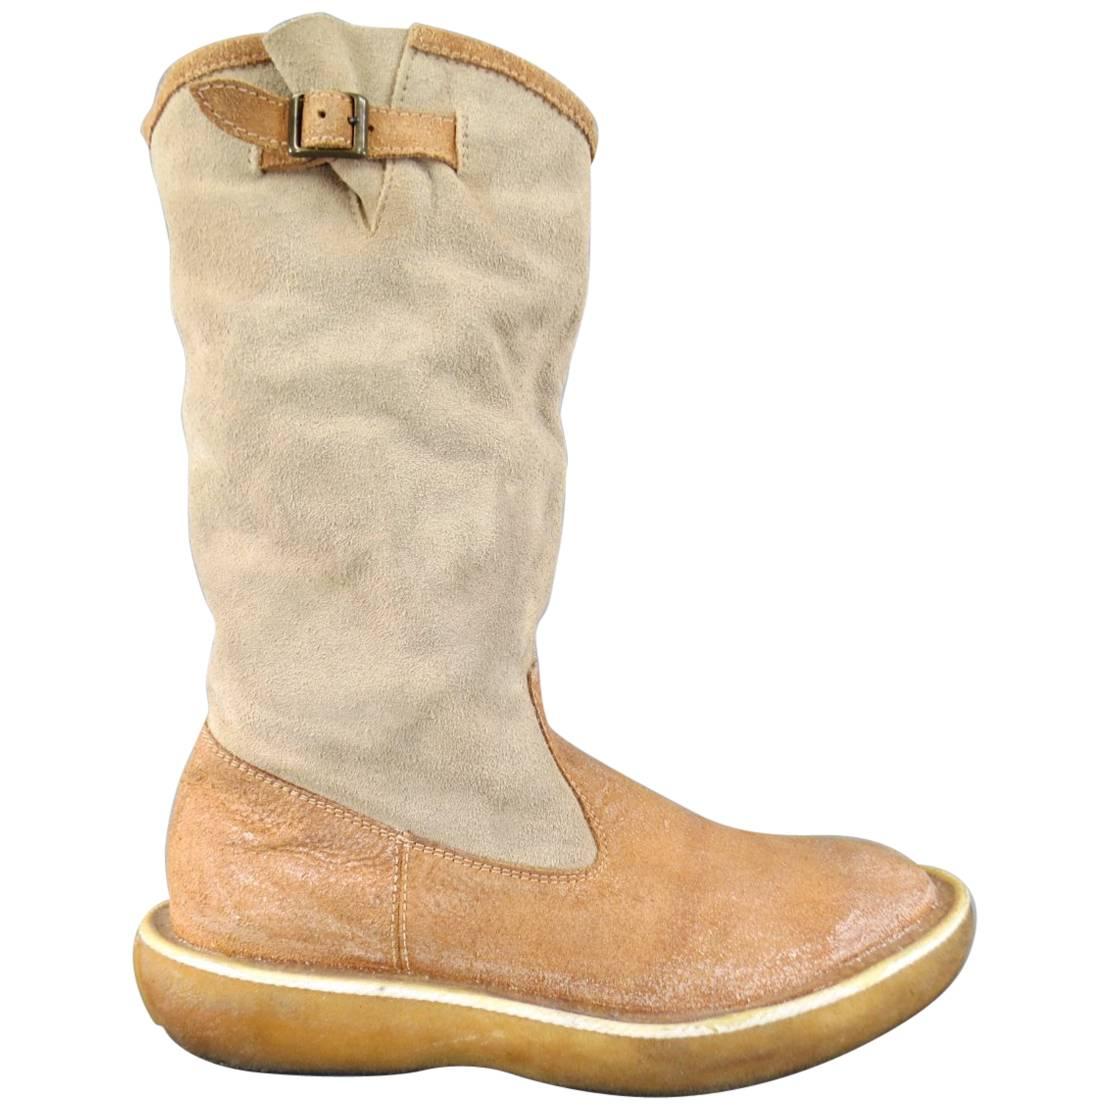 Men's KAPITAL Size 9 Tan & Gray Suede Calf High Popeye Boots